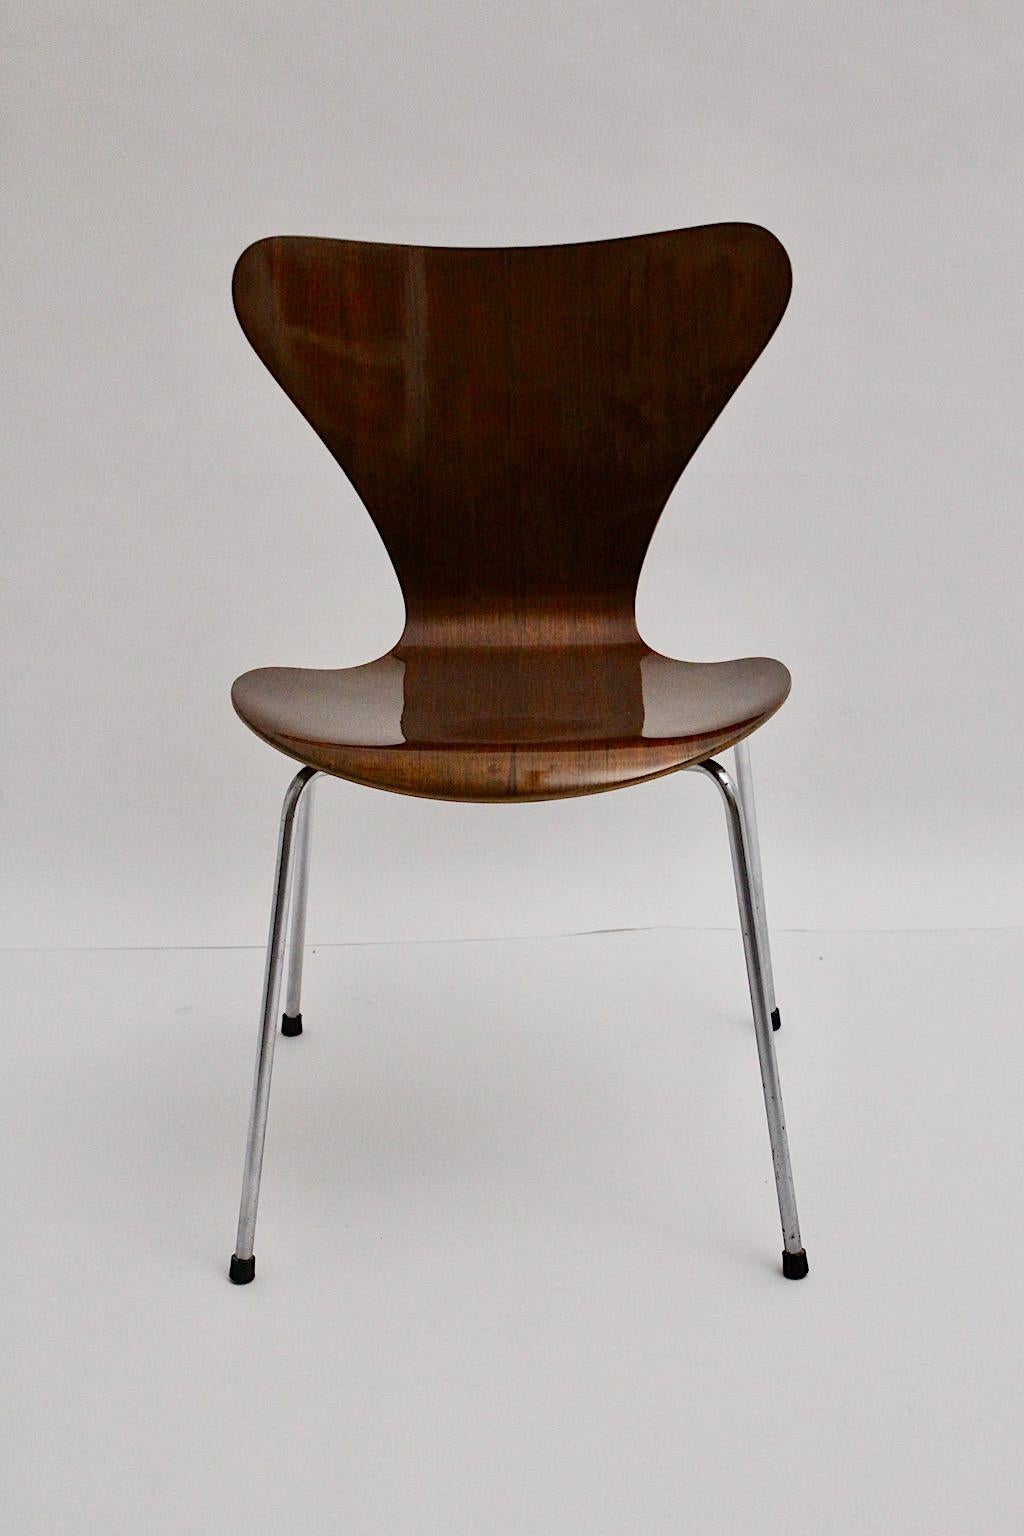 Modernist Vintage Brown Four Dining Chairs Arne Jacobsen 3107 circa 1955 Denmark For Sale 6